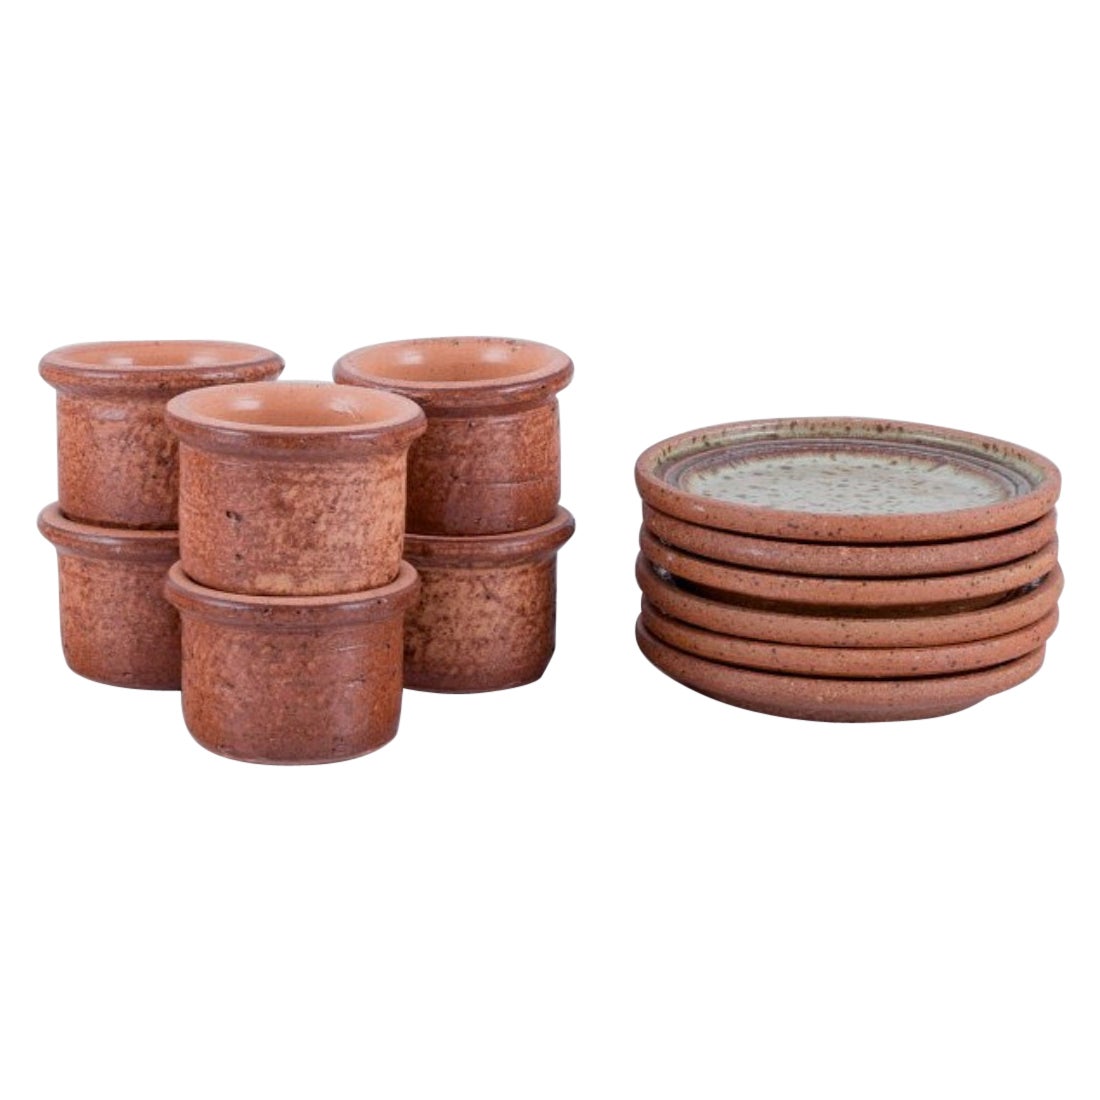 Stouby Keramik. Set of six small handmade ceramic vases and six plates